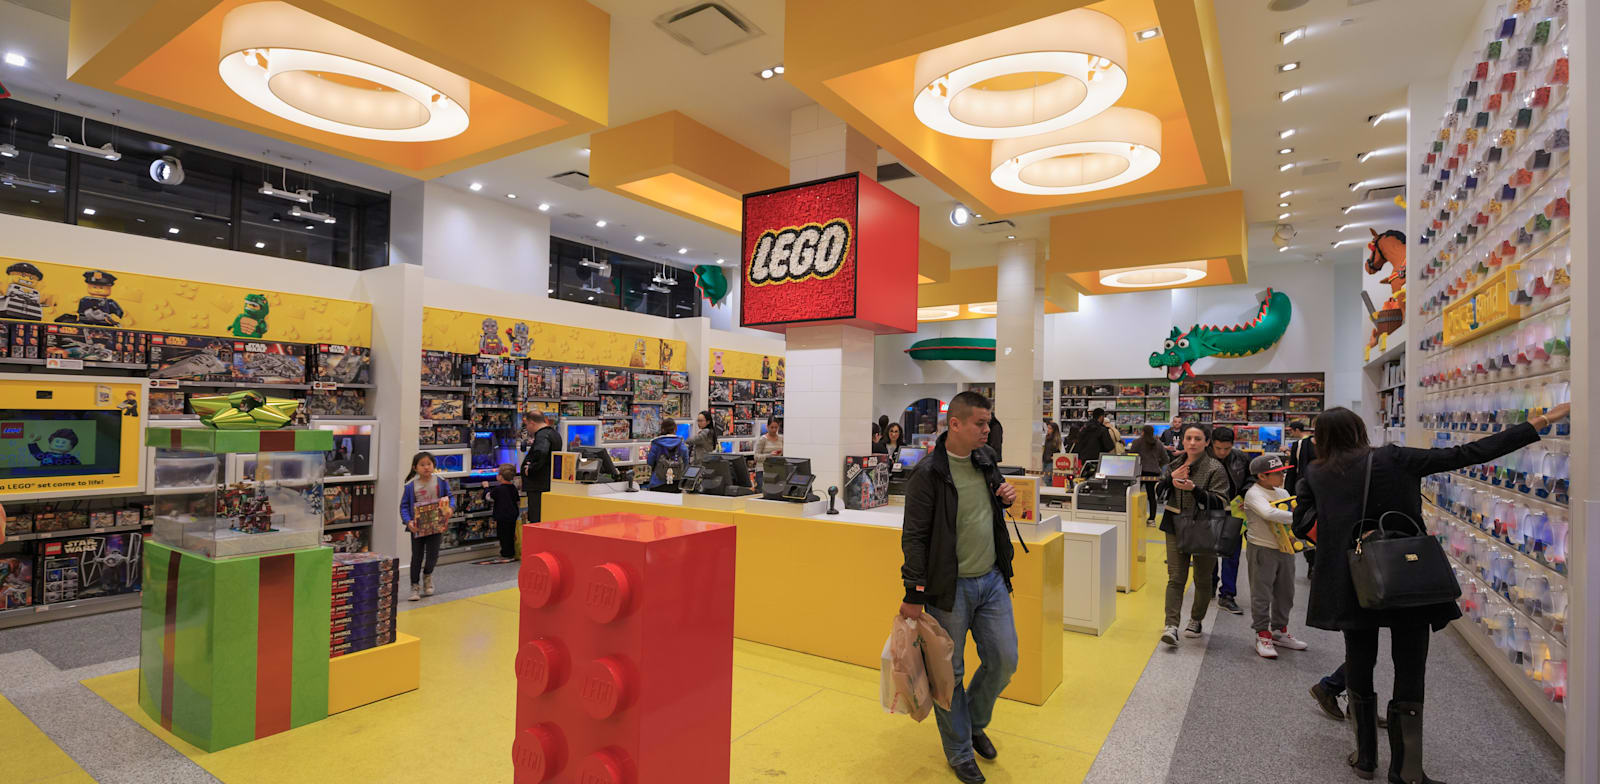 Lego store in New York Photo: Shutterstock